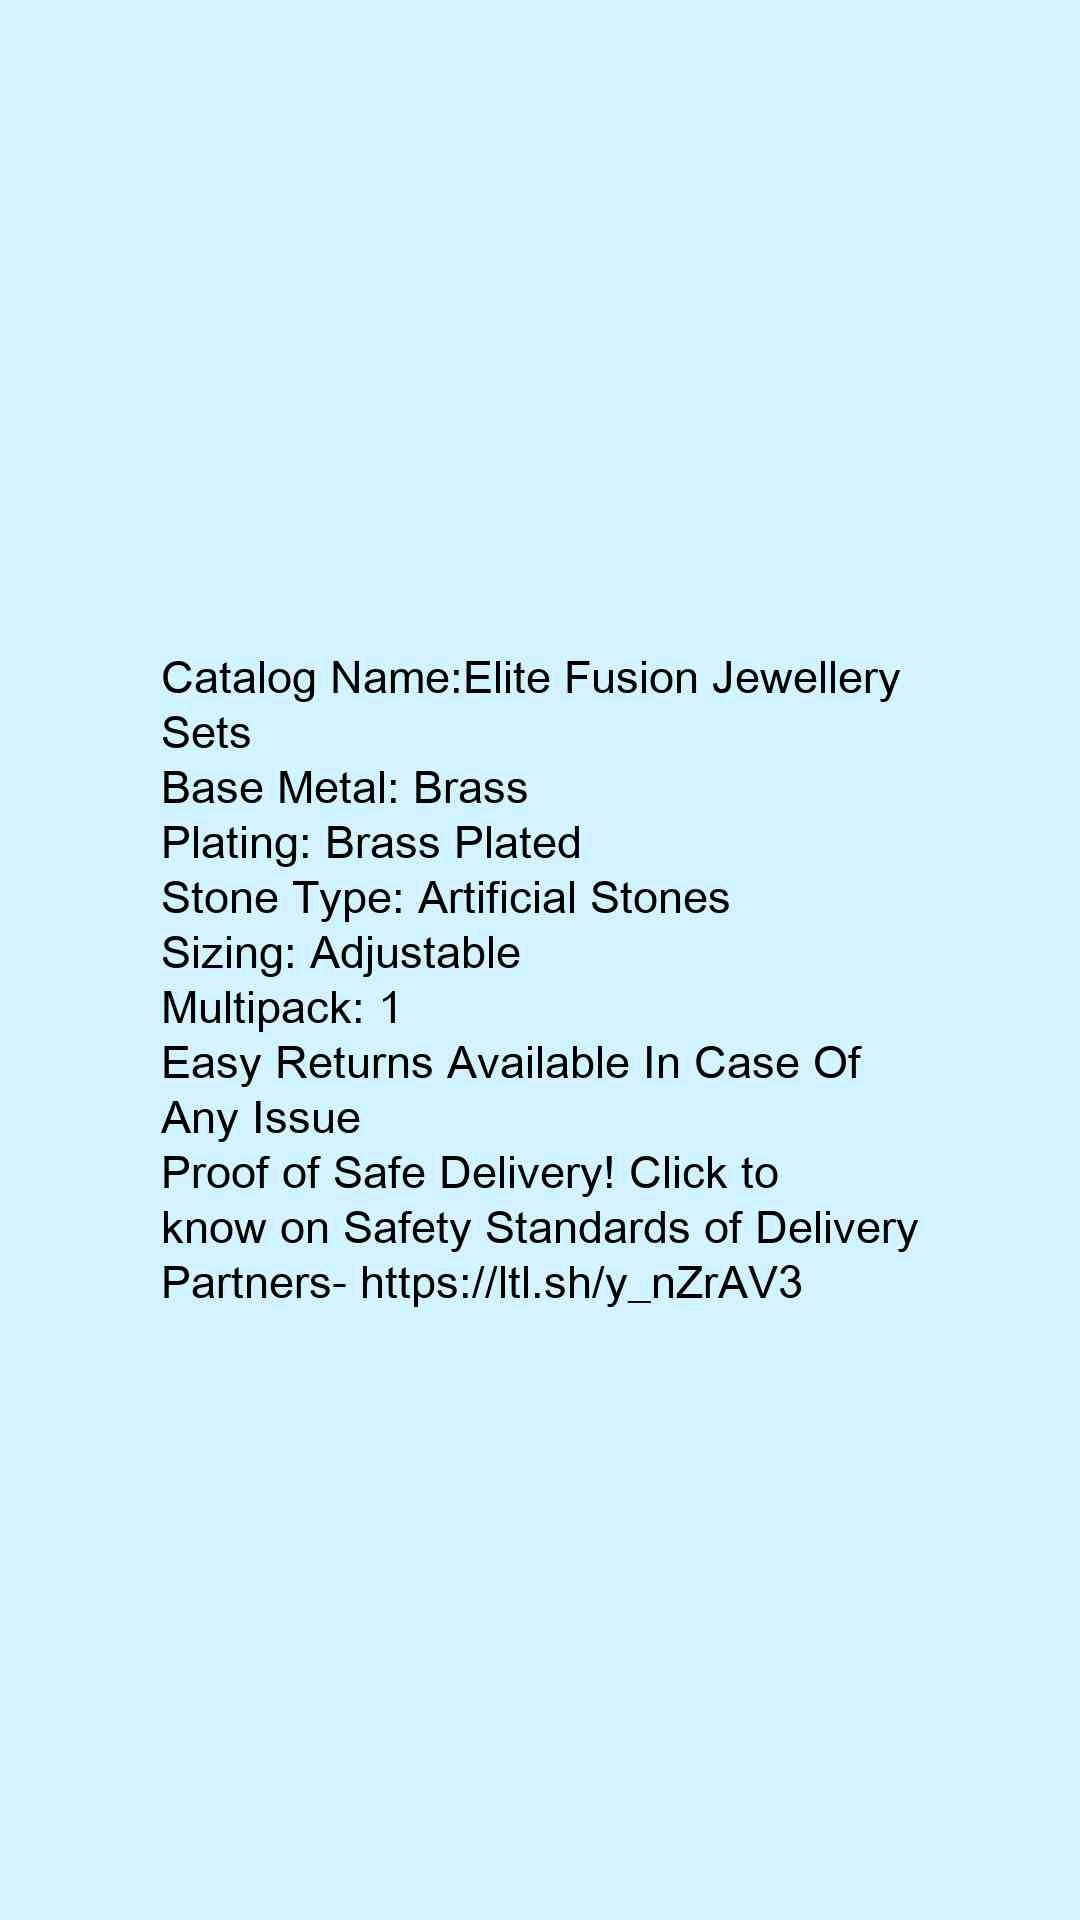 Elite Fusion Jewellery Sets